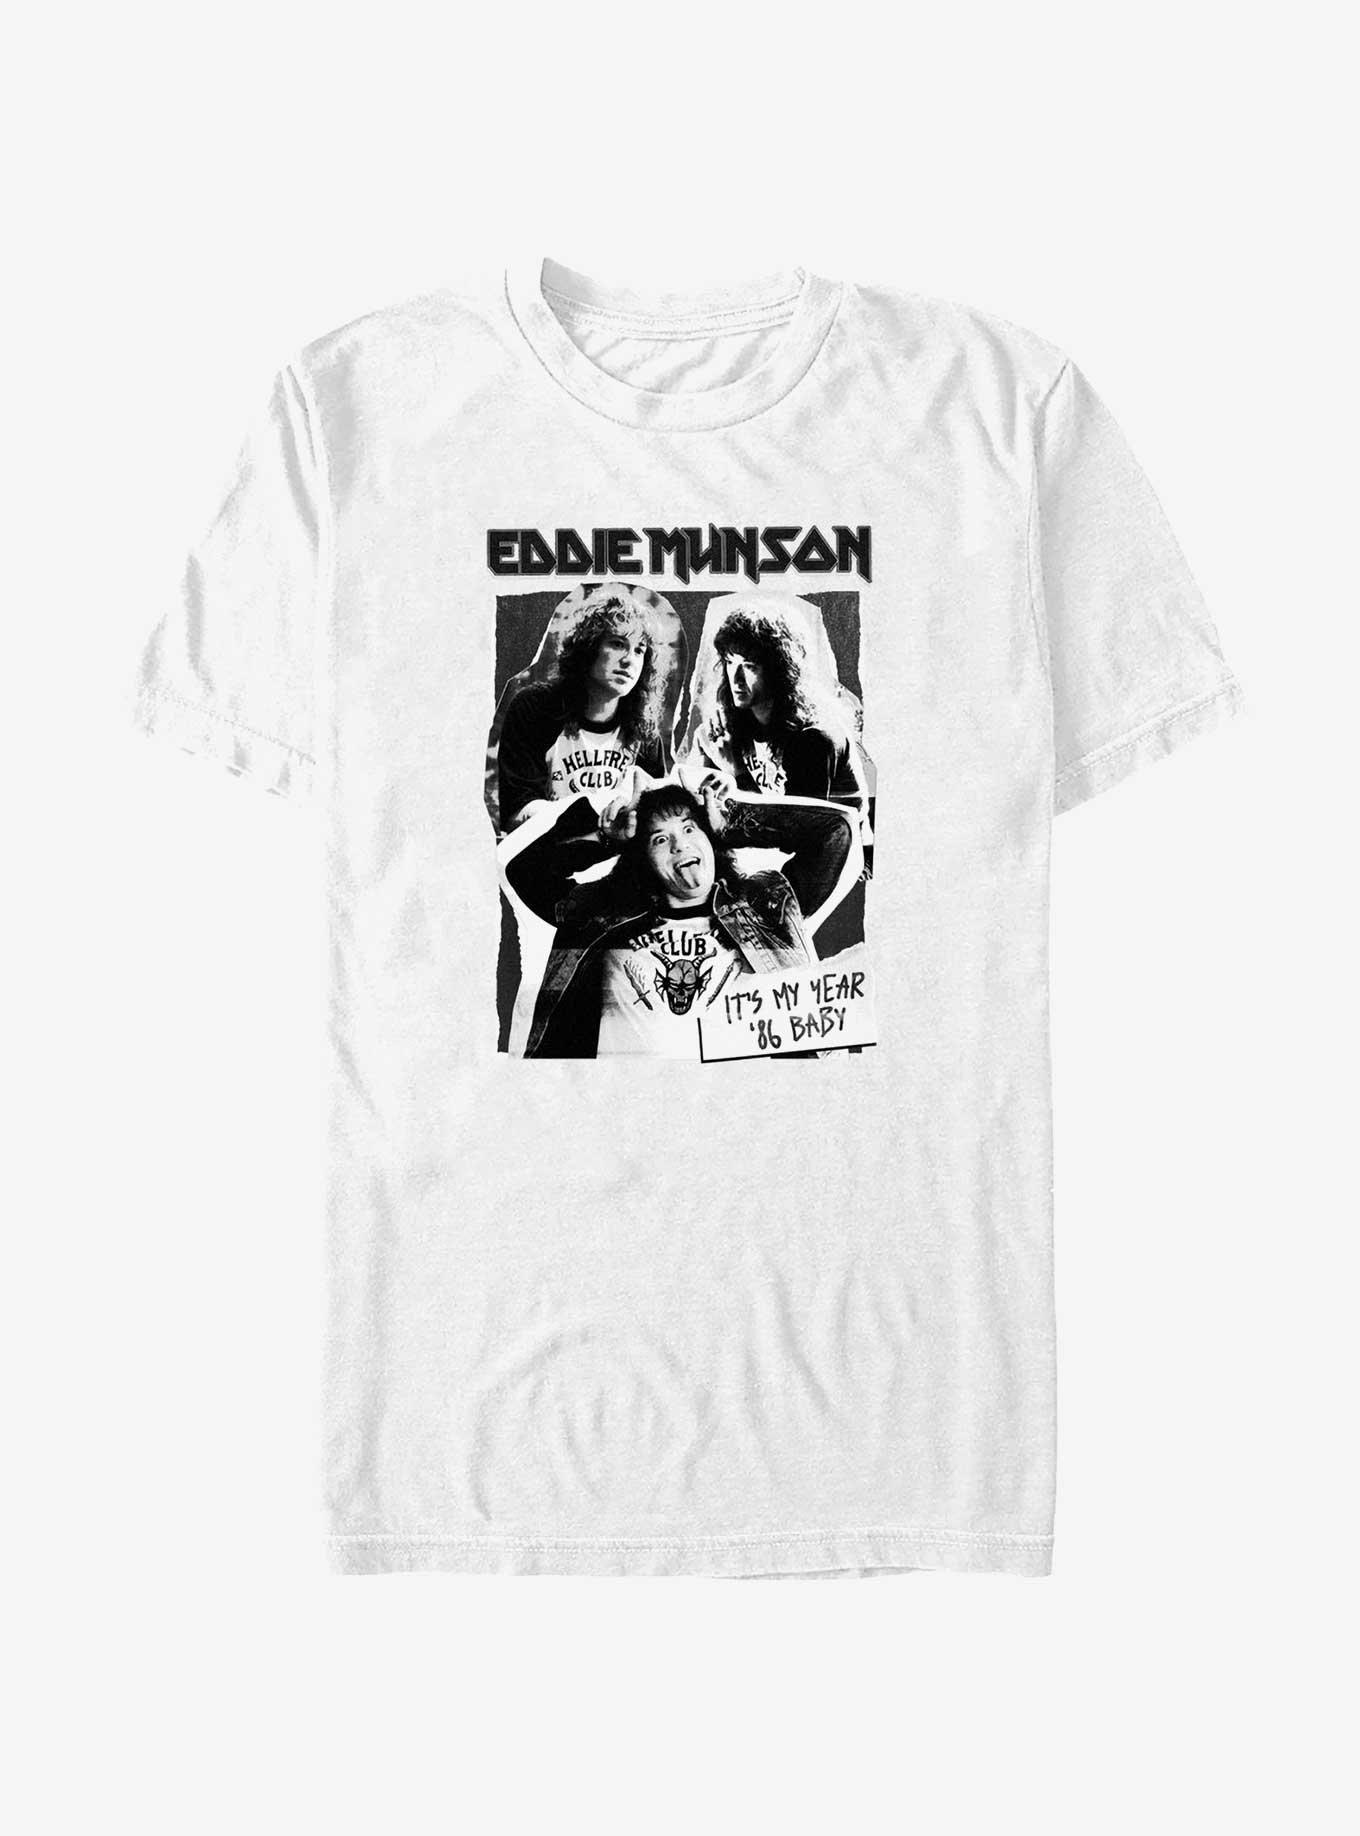 Stranger Things Tee - Cosplay Shirt, Eddie Munson, Black T-Shirt